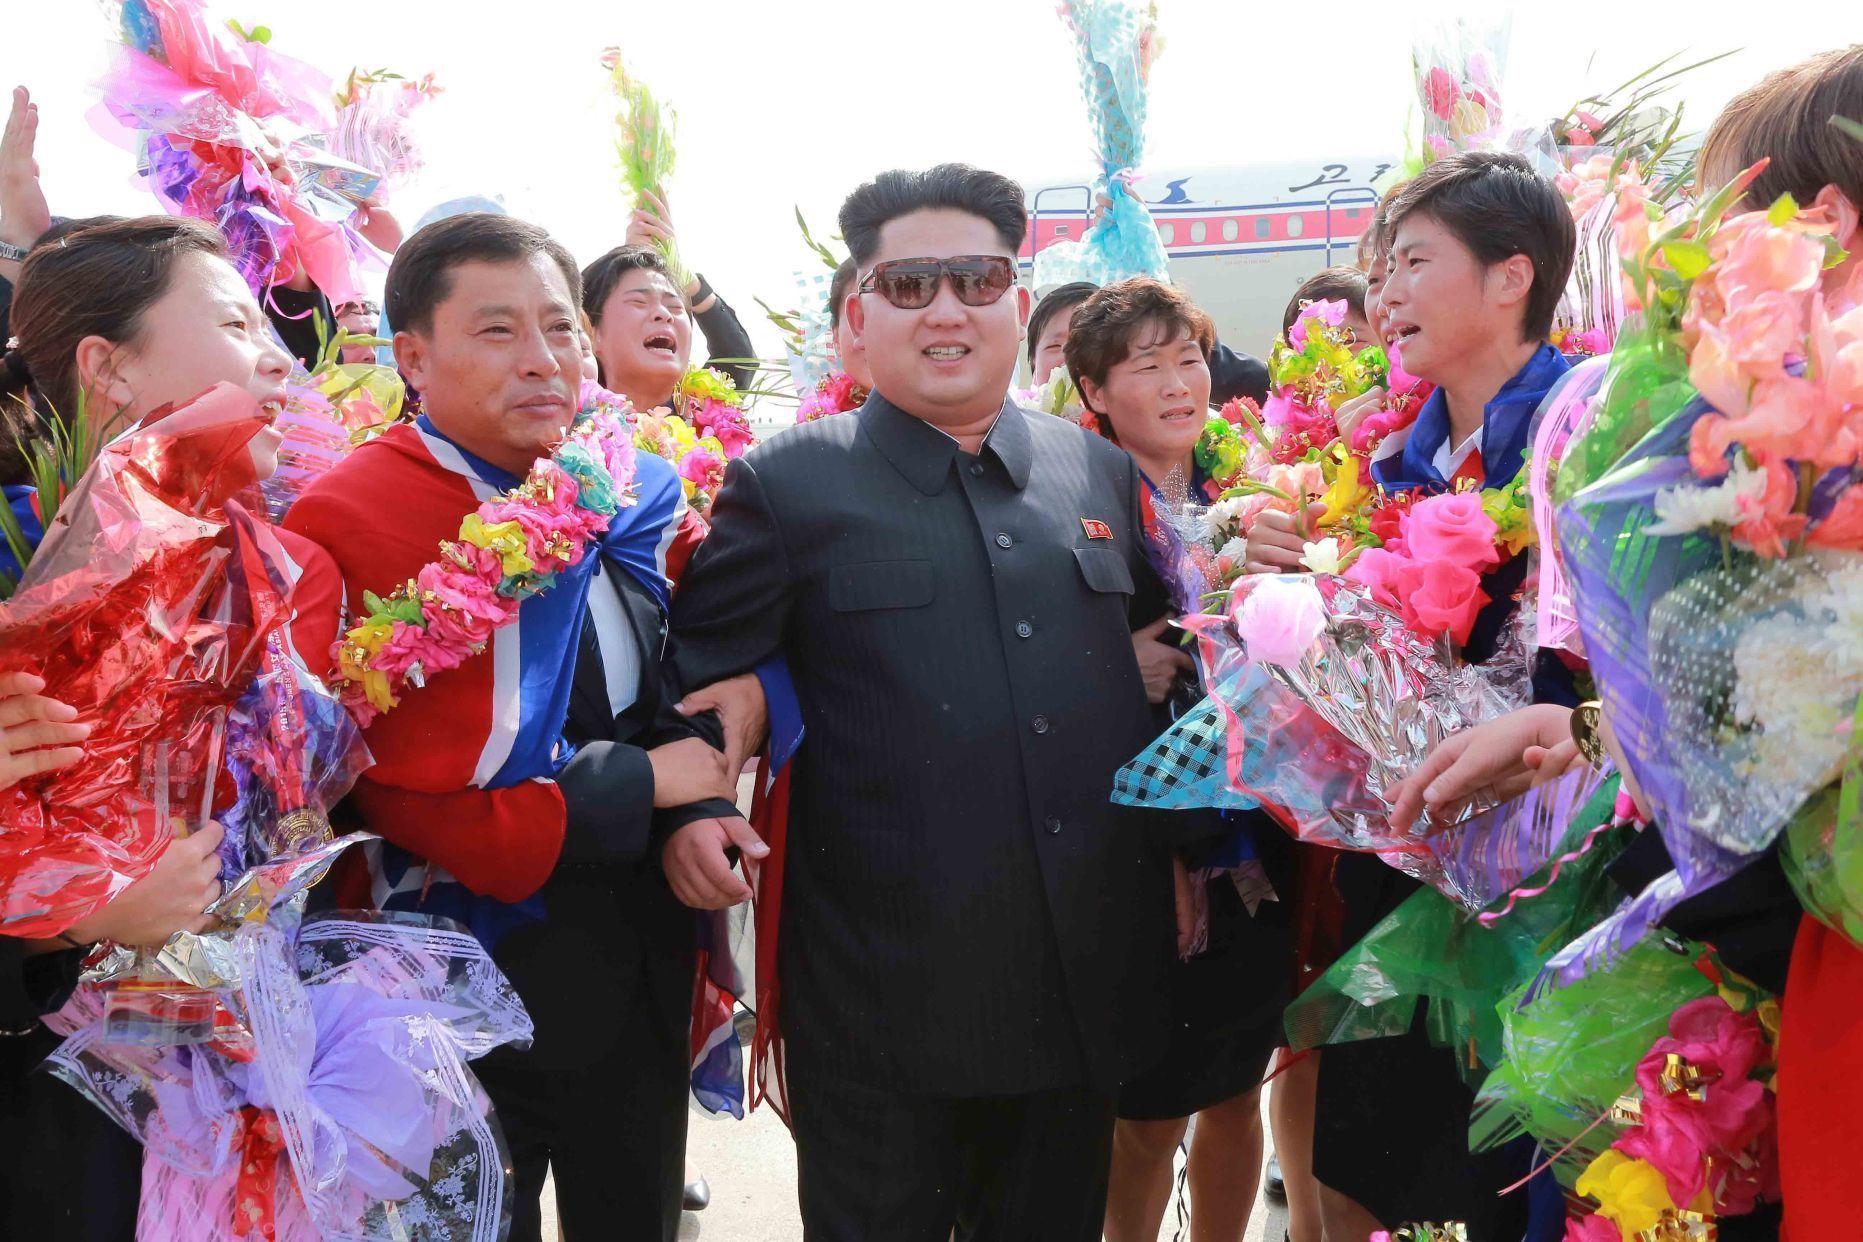 North korea kim jong un women